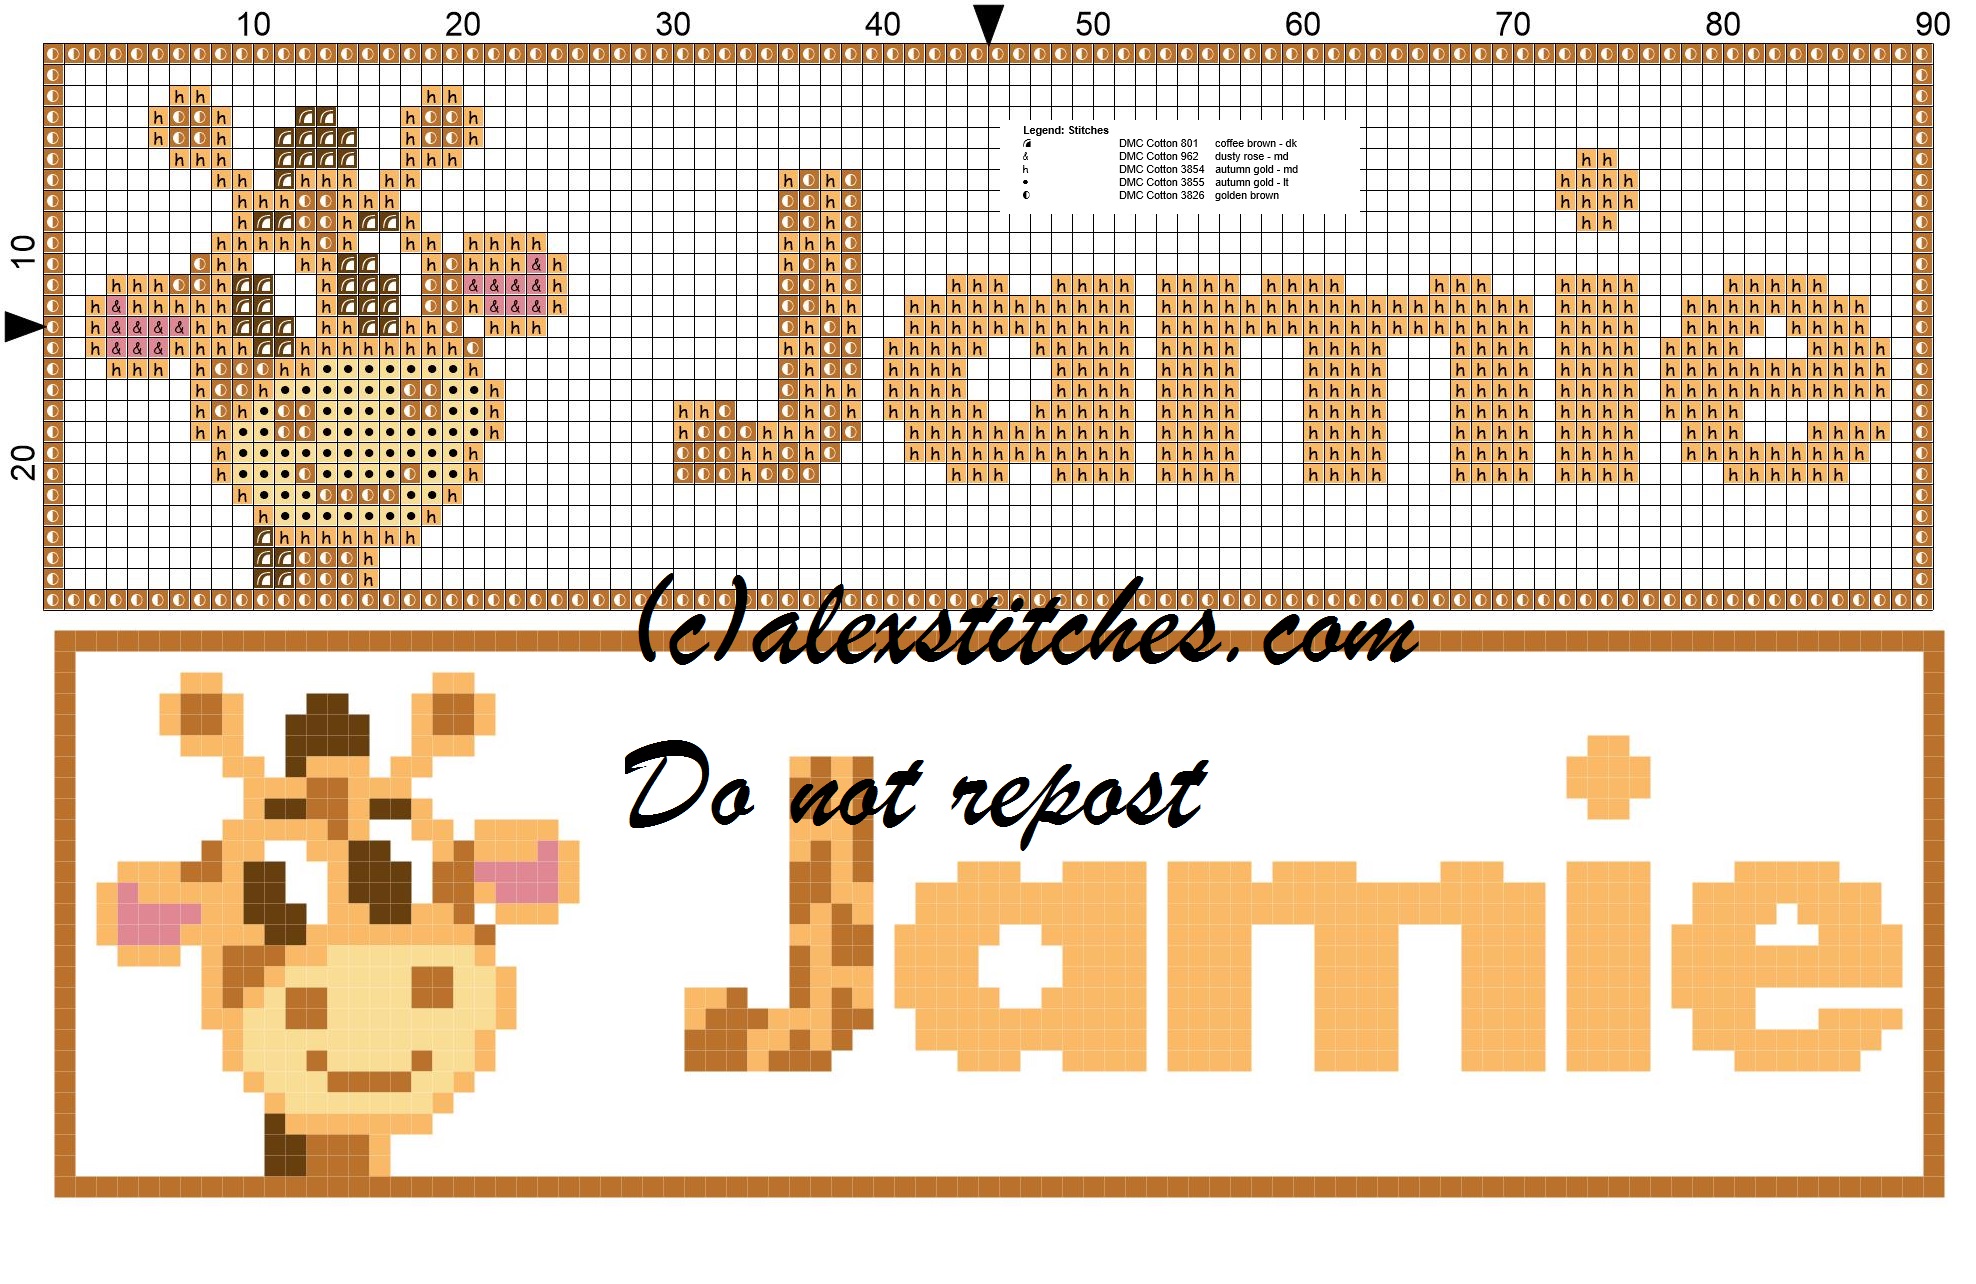 Jamie name with giraffe cross stitch pattern